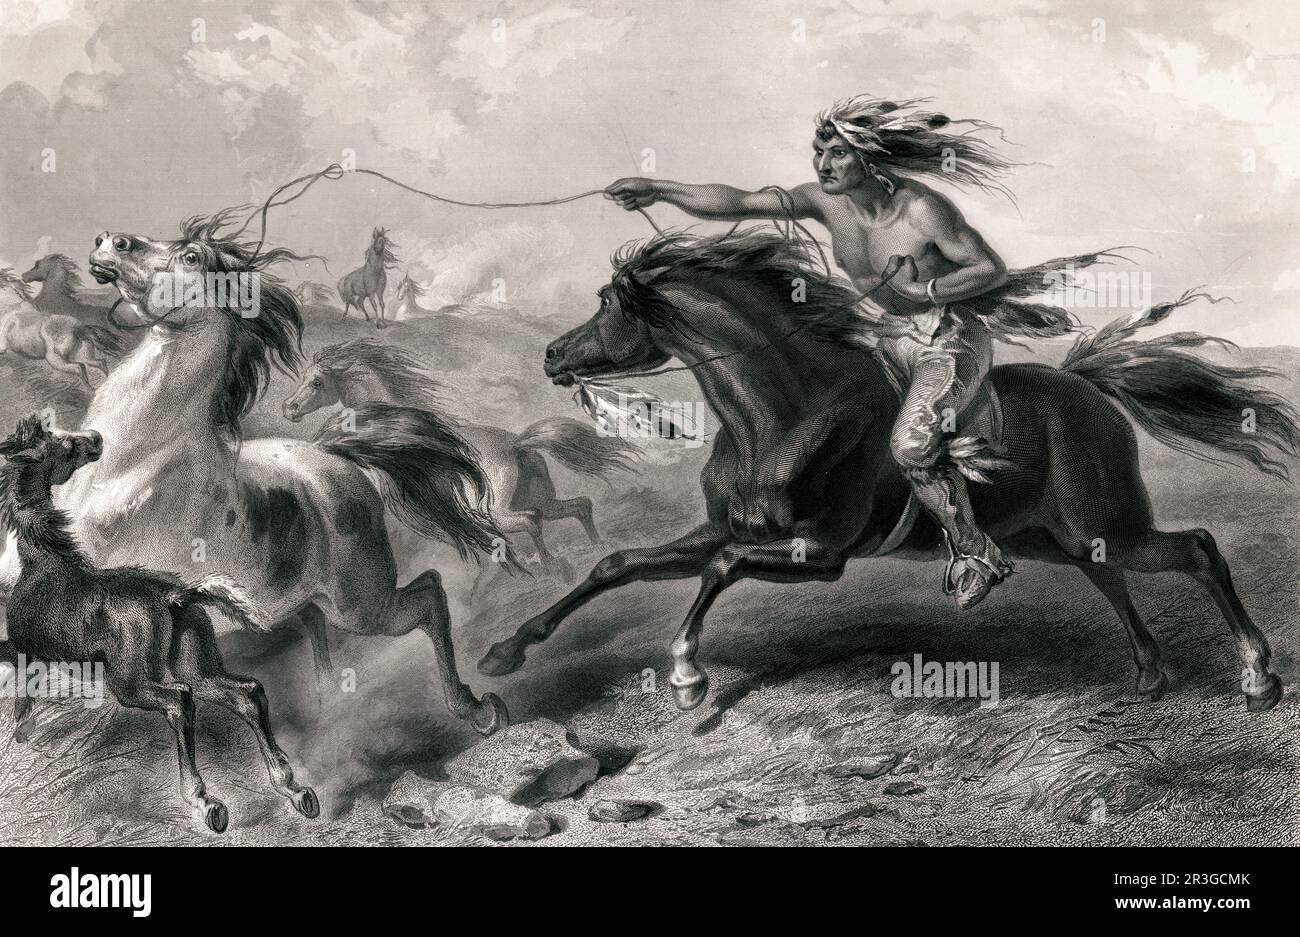 Native American lassoing wild horses. Stock Photo